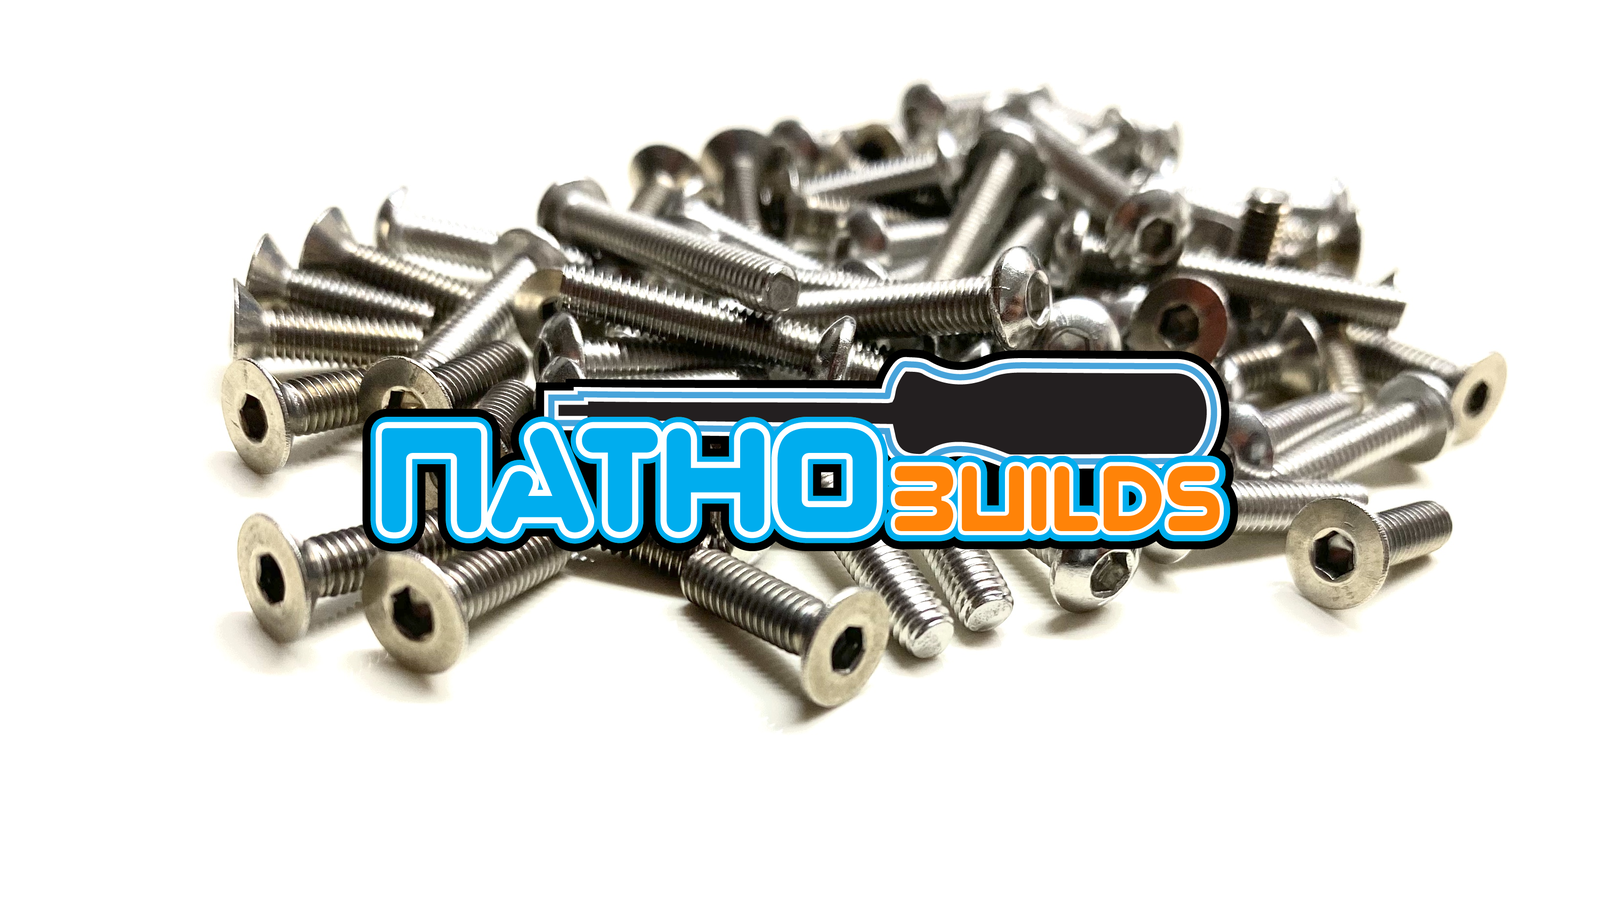 NathoBuilds: Stainless Steel Screw Kits - 4WD - Yokomo BD10